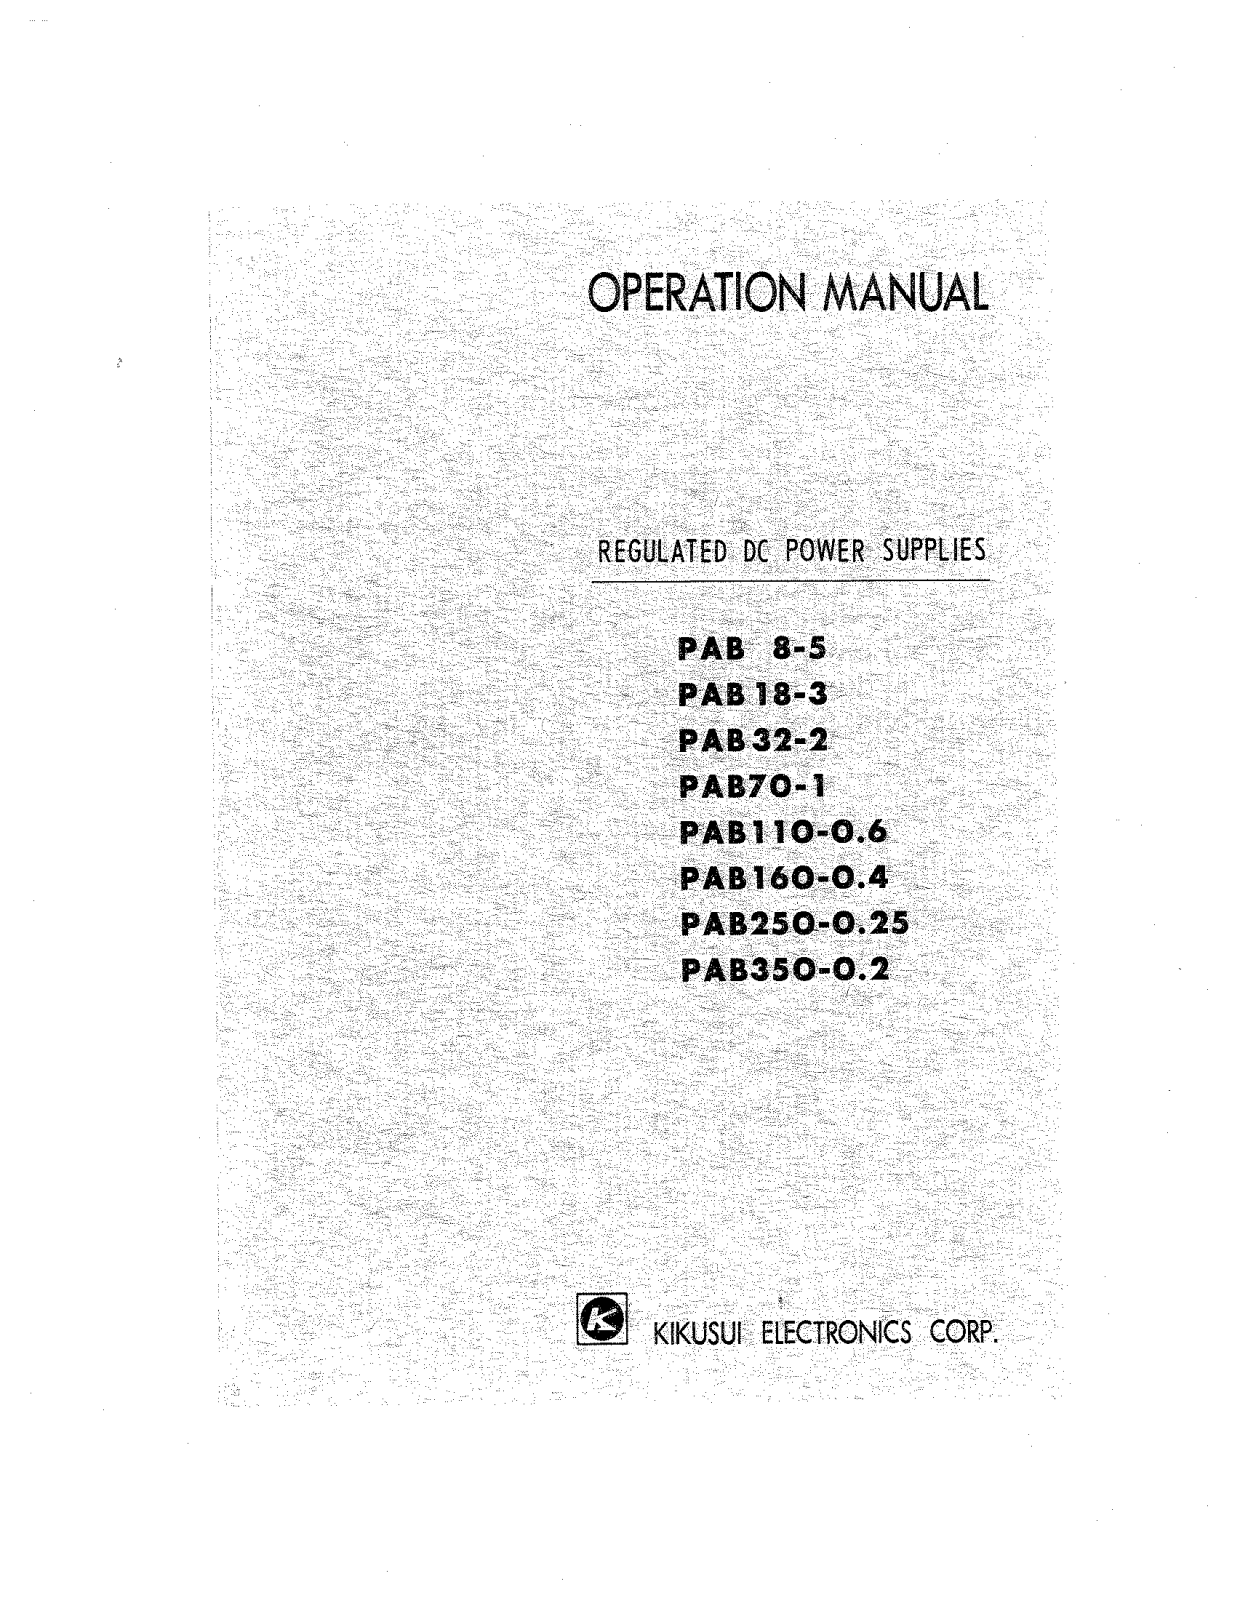 Kikusui Electronics Corporation PAB 250-0.25, PAB 350-0.2, PAB 160-0.4, PAB 110-0.6, PAB 70-1 Service manual